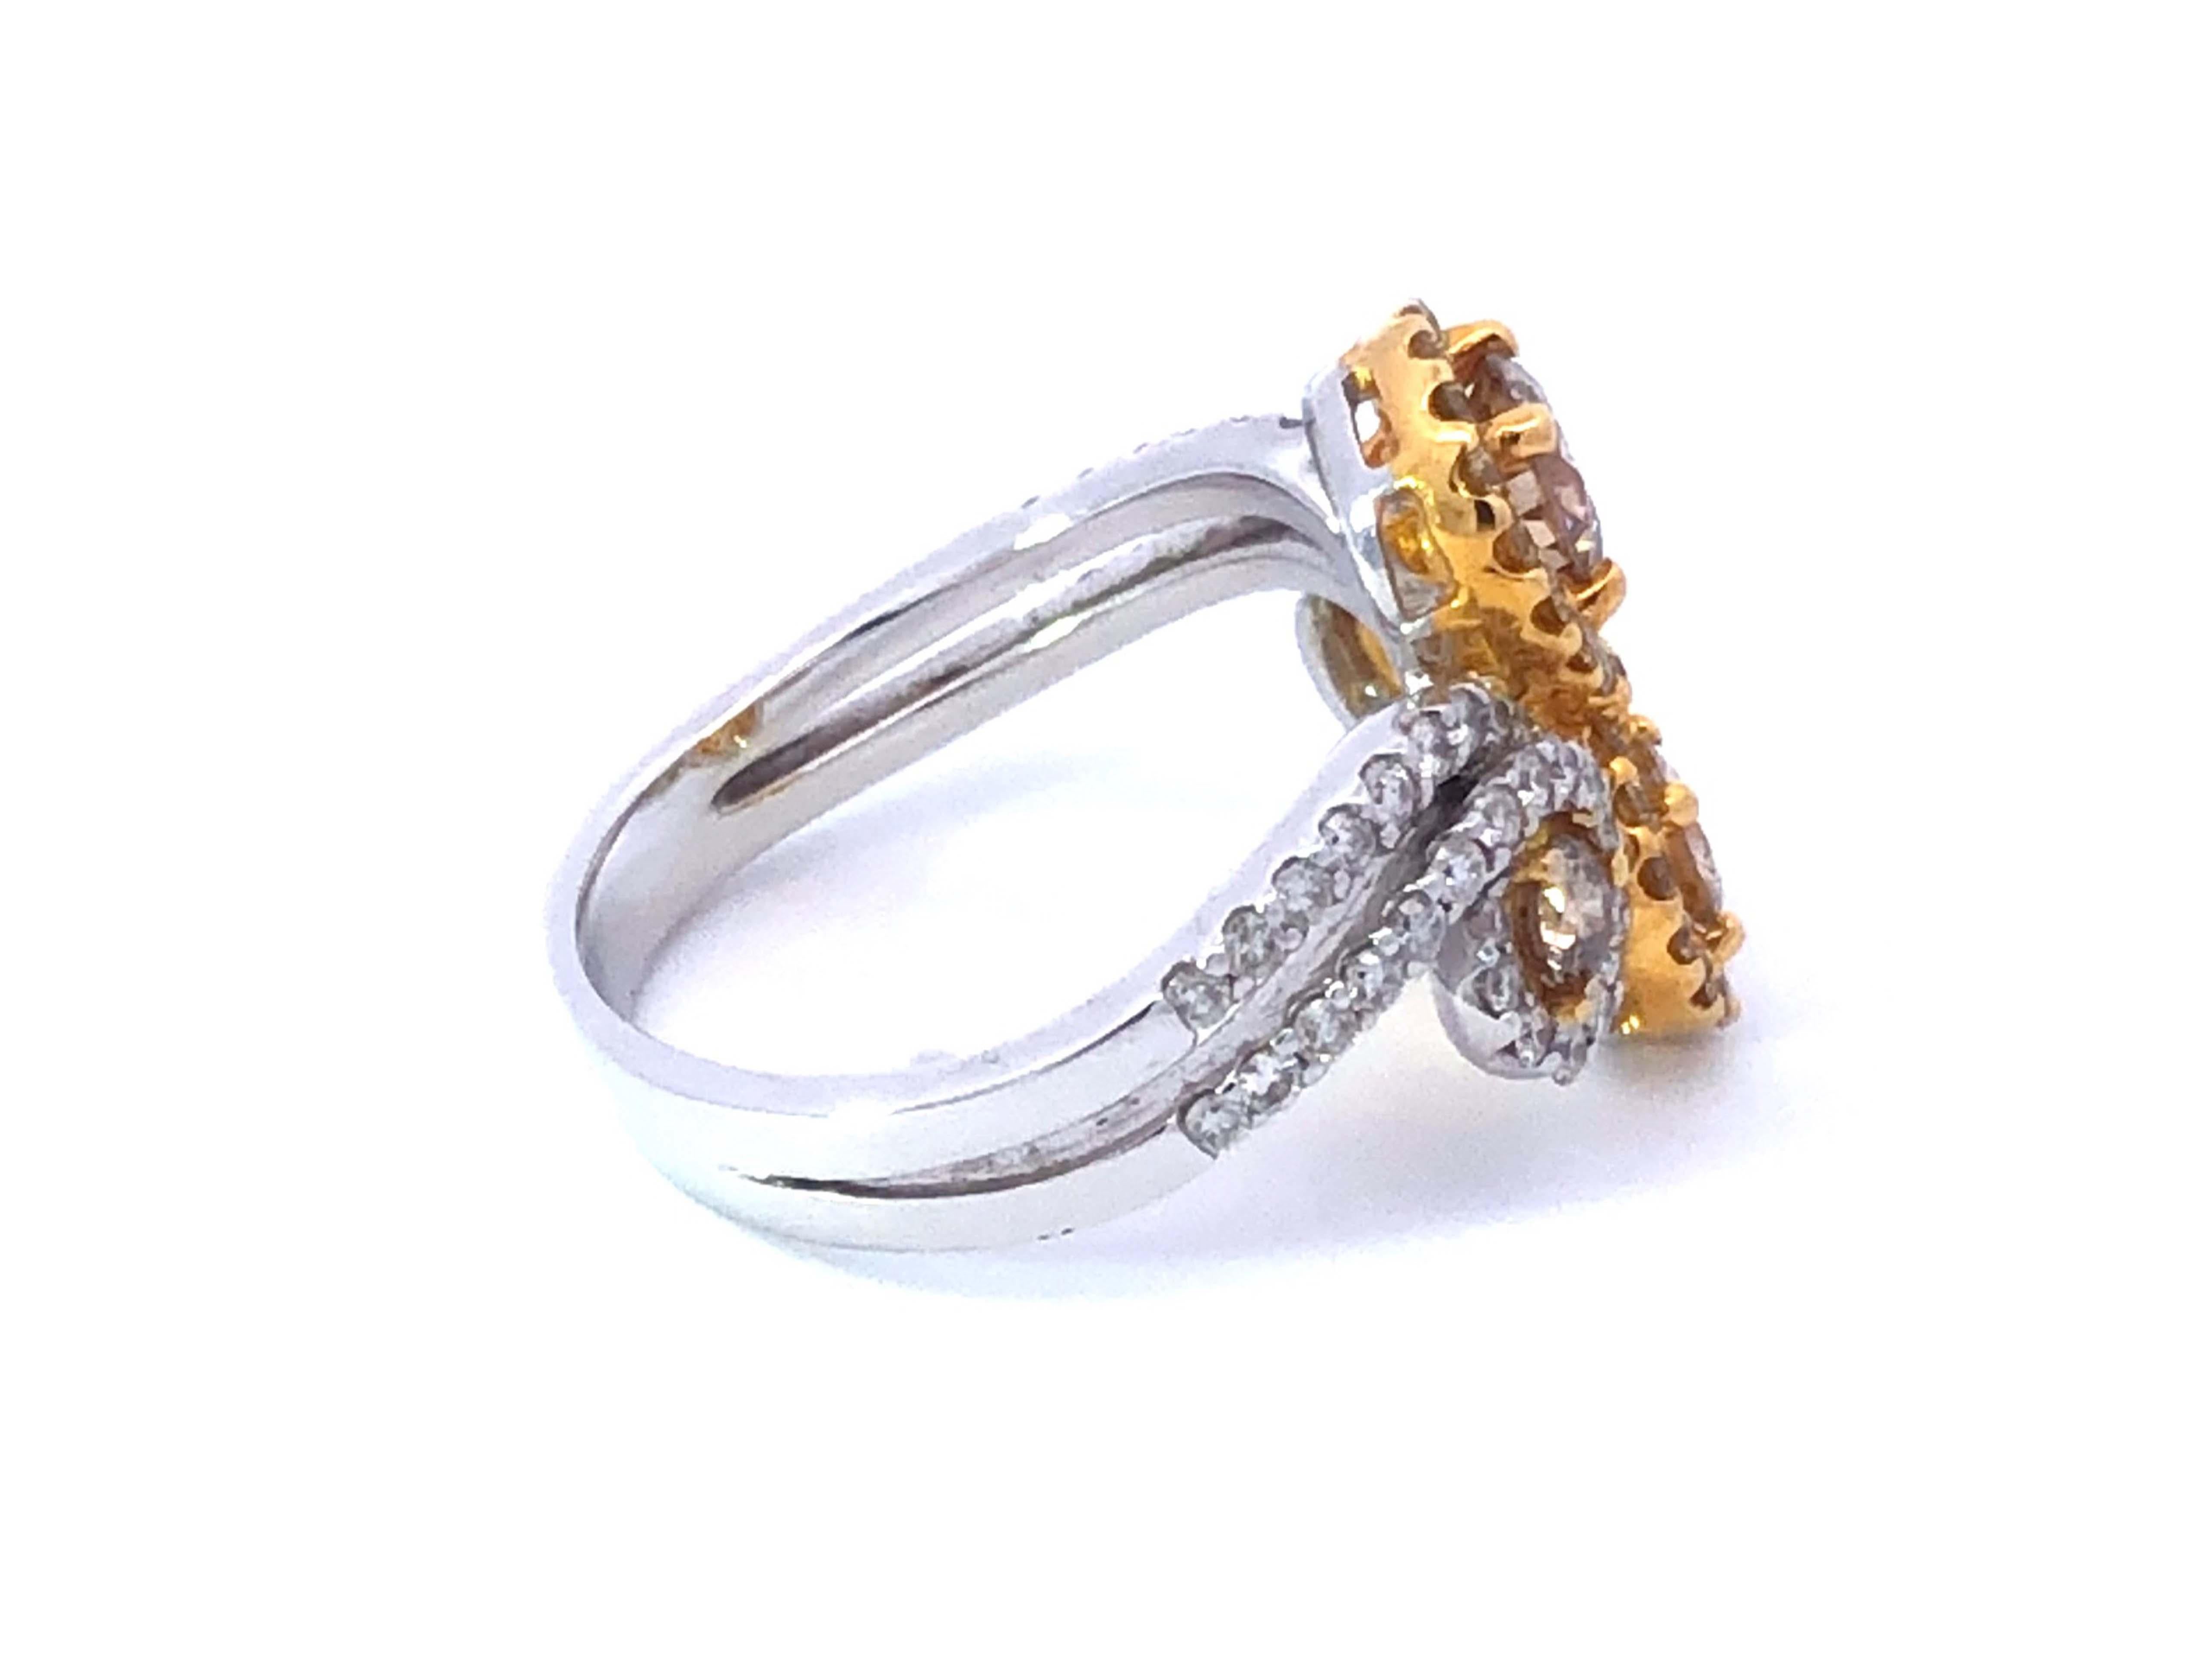 4 stone diamond ring designs